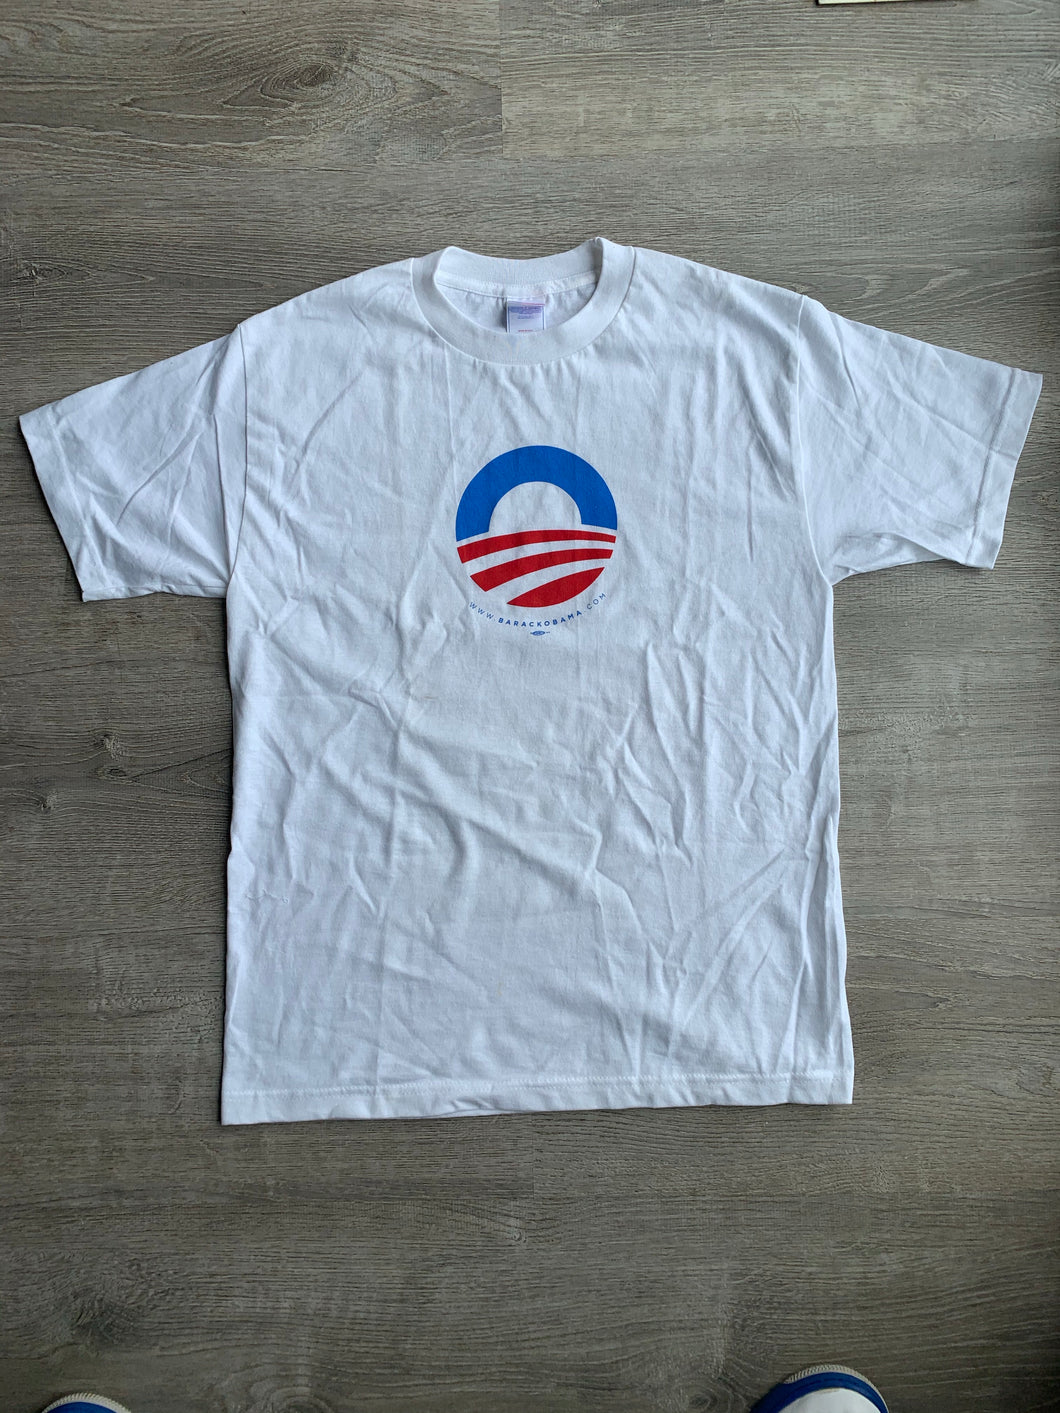 Barack Obama Campaign Tee - M